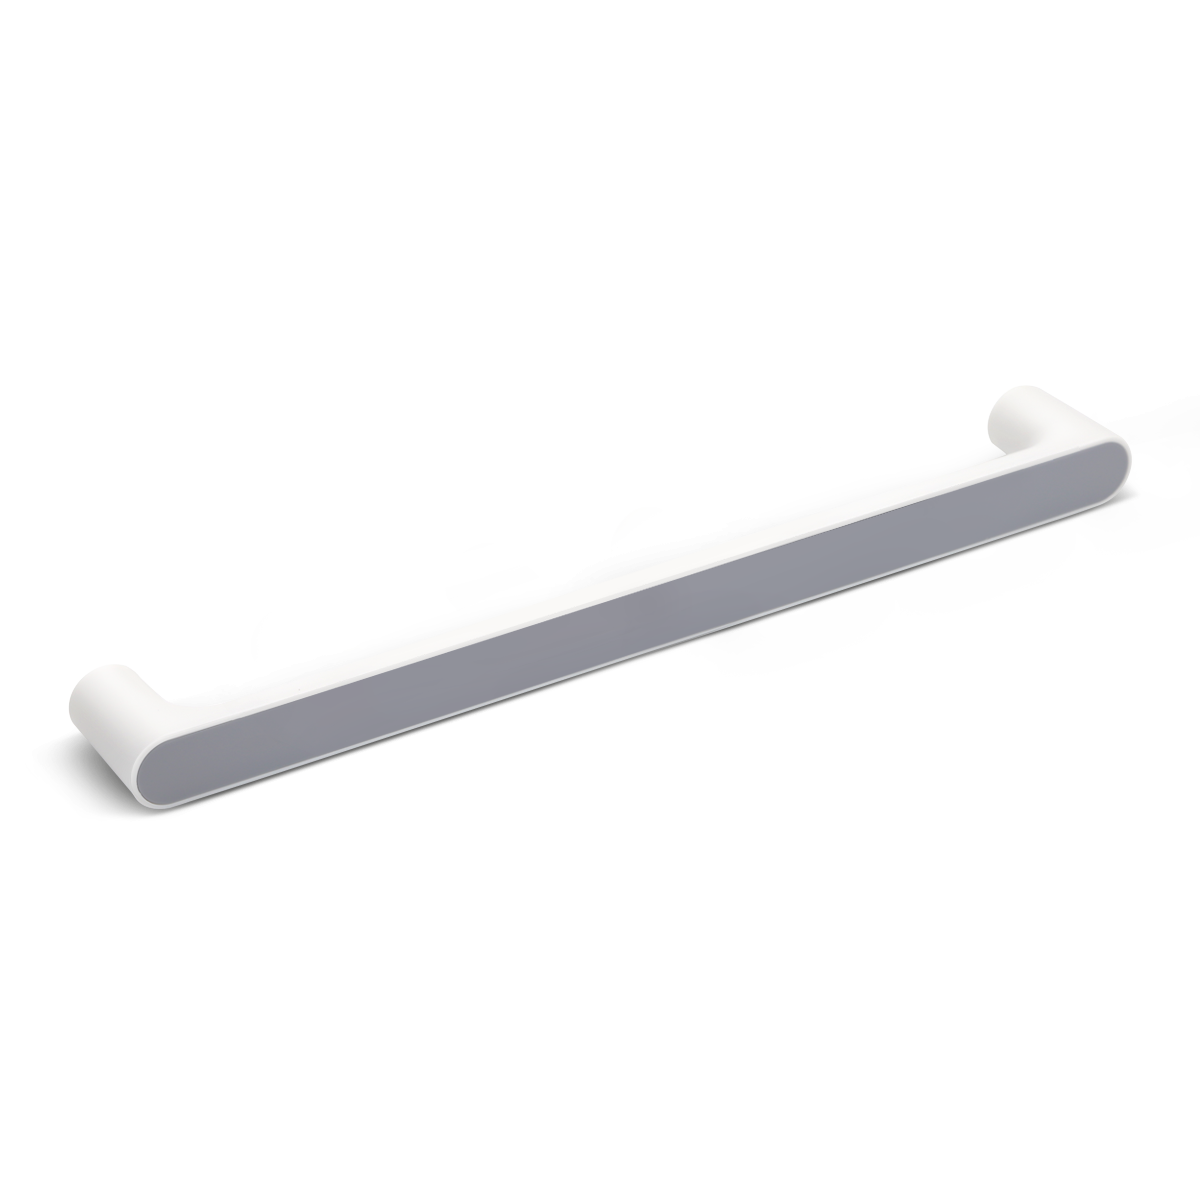 Держатель для полотенец MVM 465мм округлый пластиковый серый BP-30 white/gray